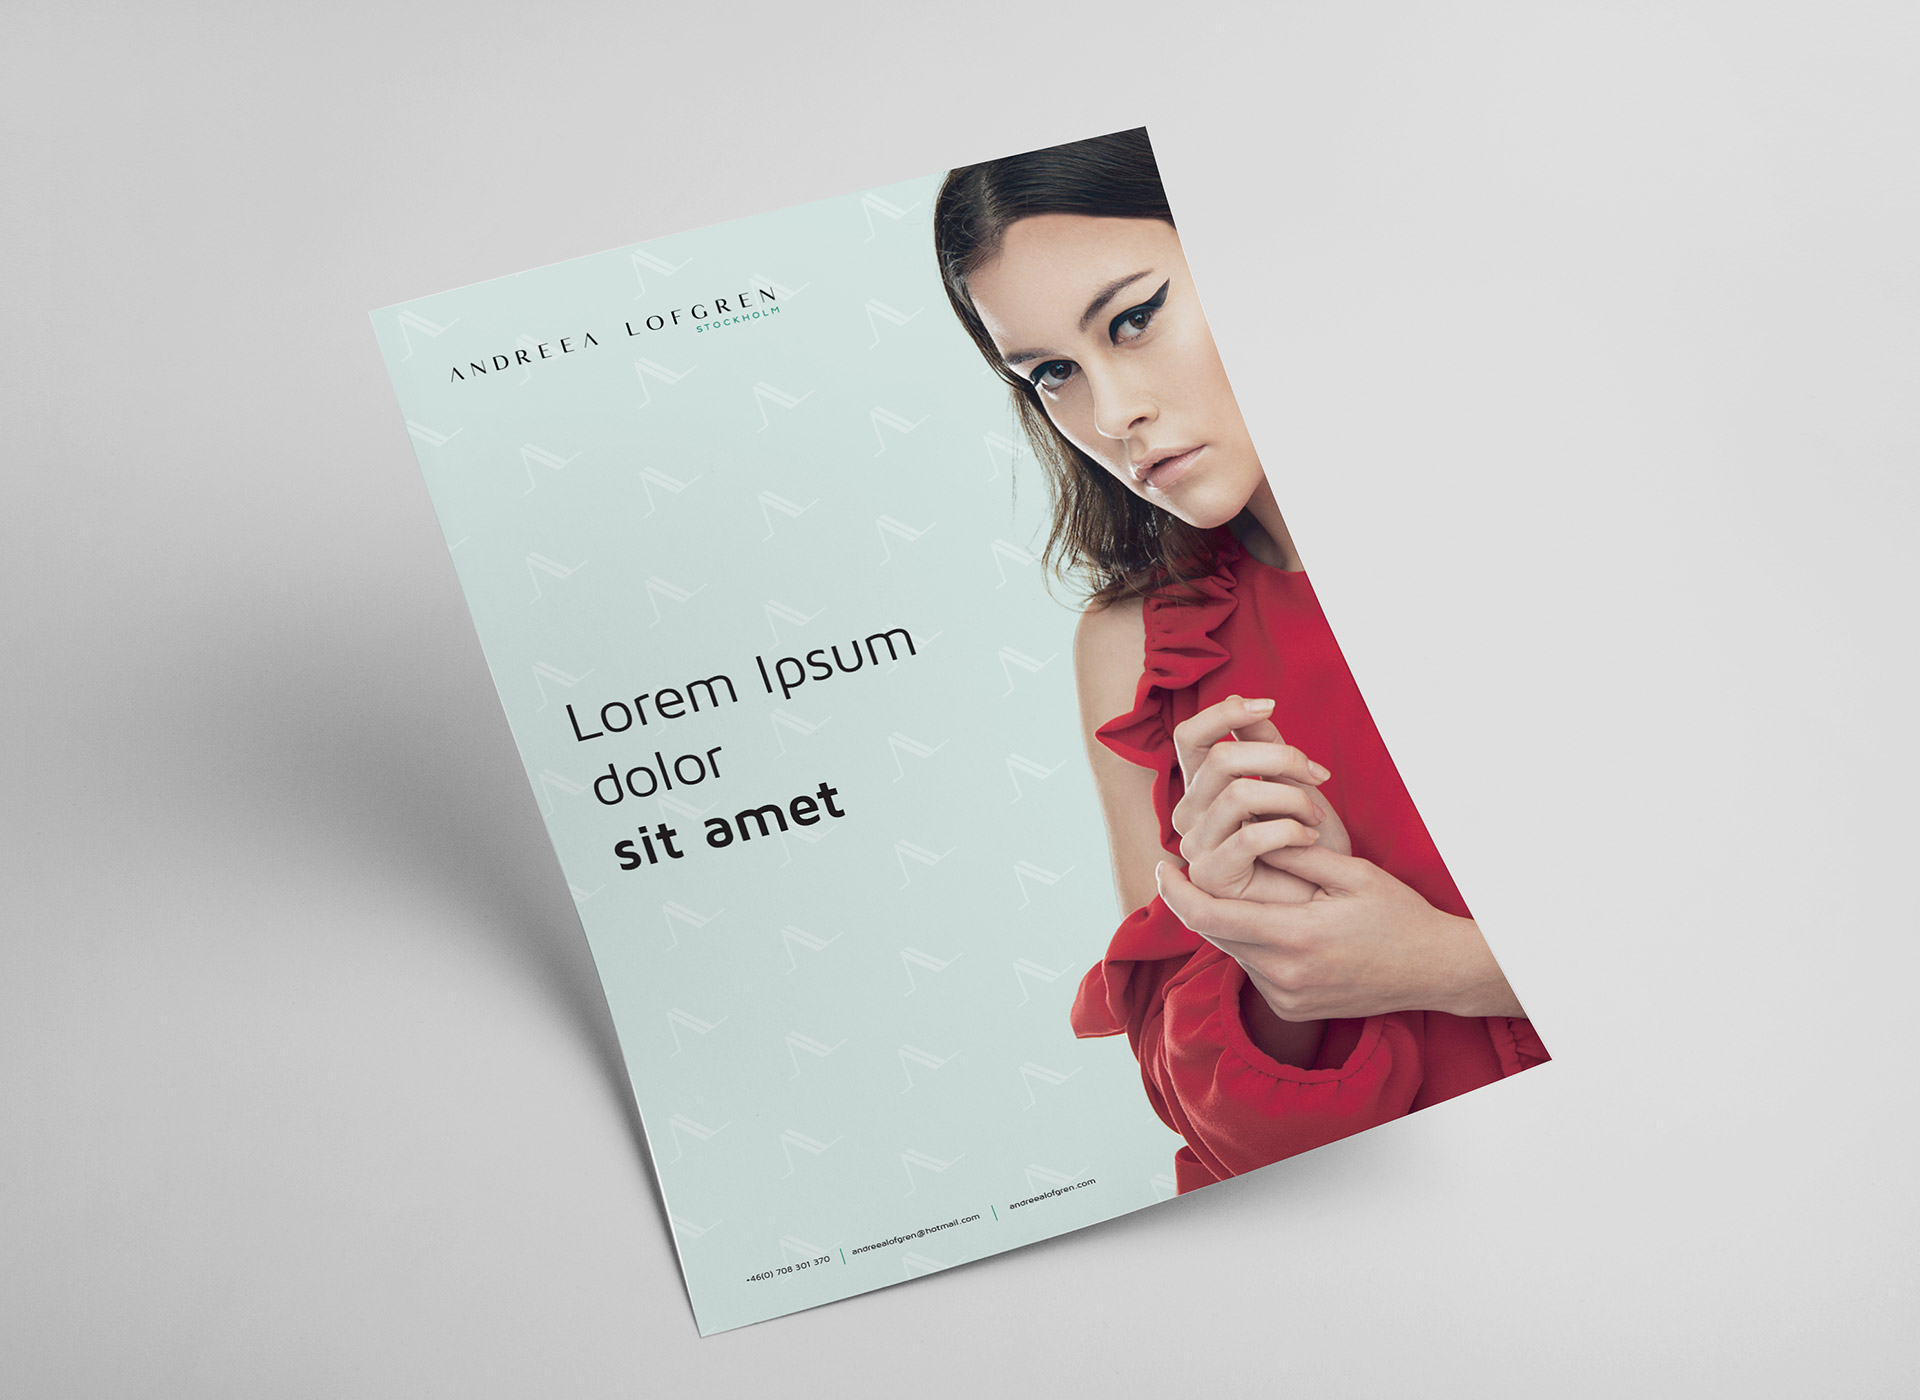 Andreea Lofgren portfolio inoveo poster